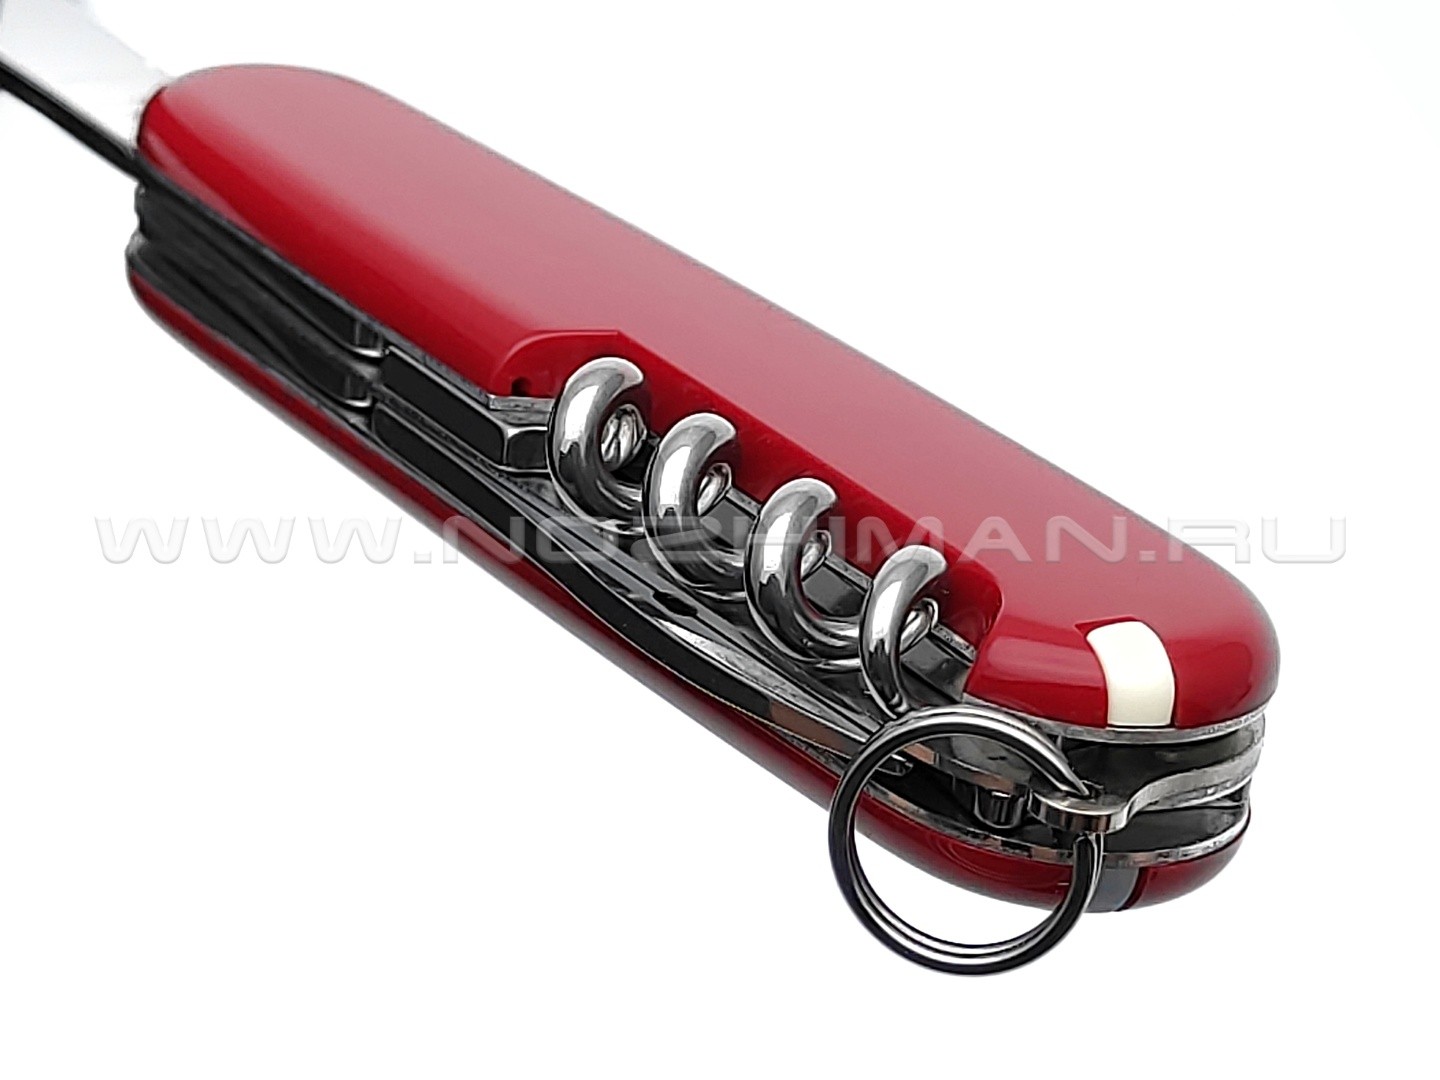 Швейцарский нож Victorinox 0.3803 Sportsman Red (13 функции)